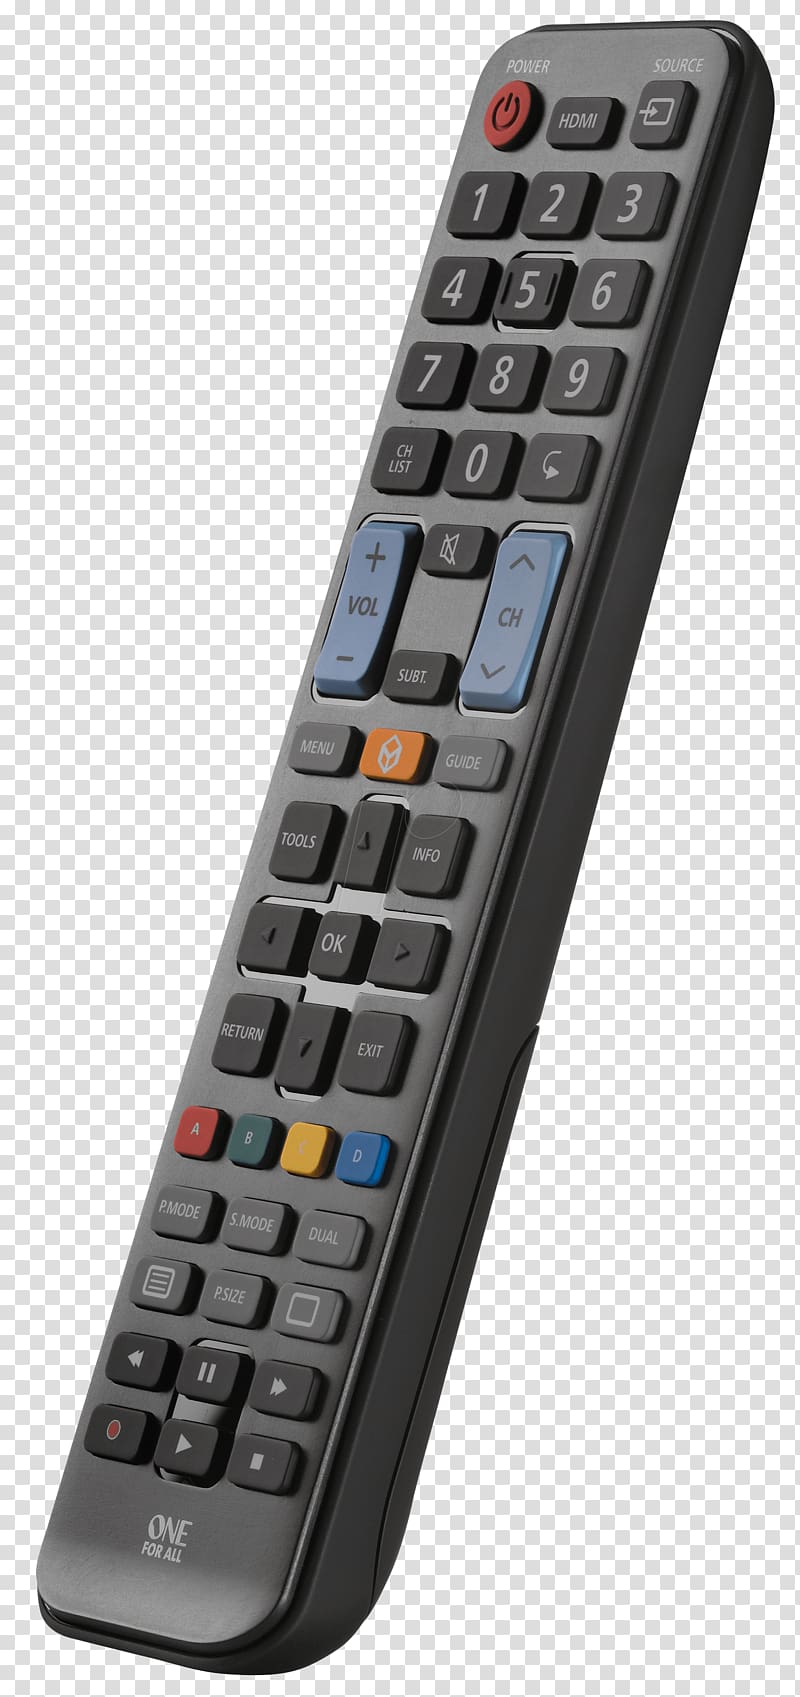 Remote Controls Television set Samsung Smart TV, tv remote control transparent background PNG clipart